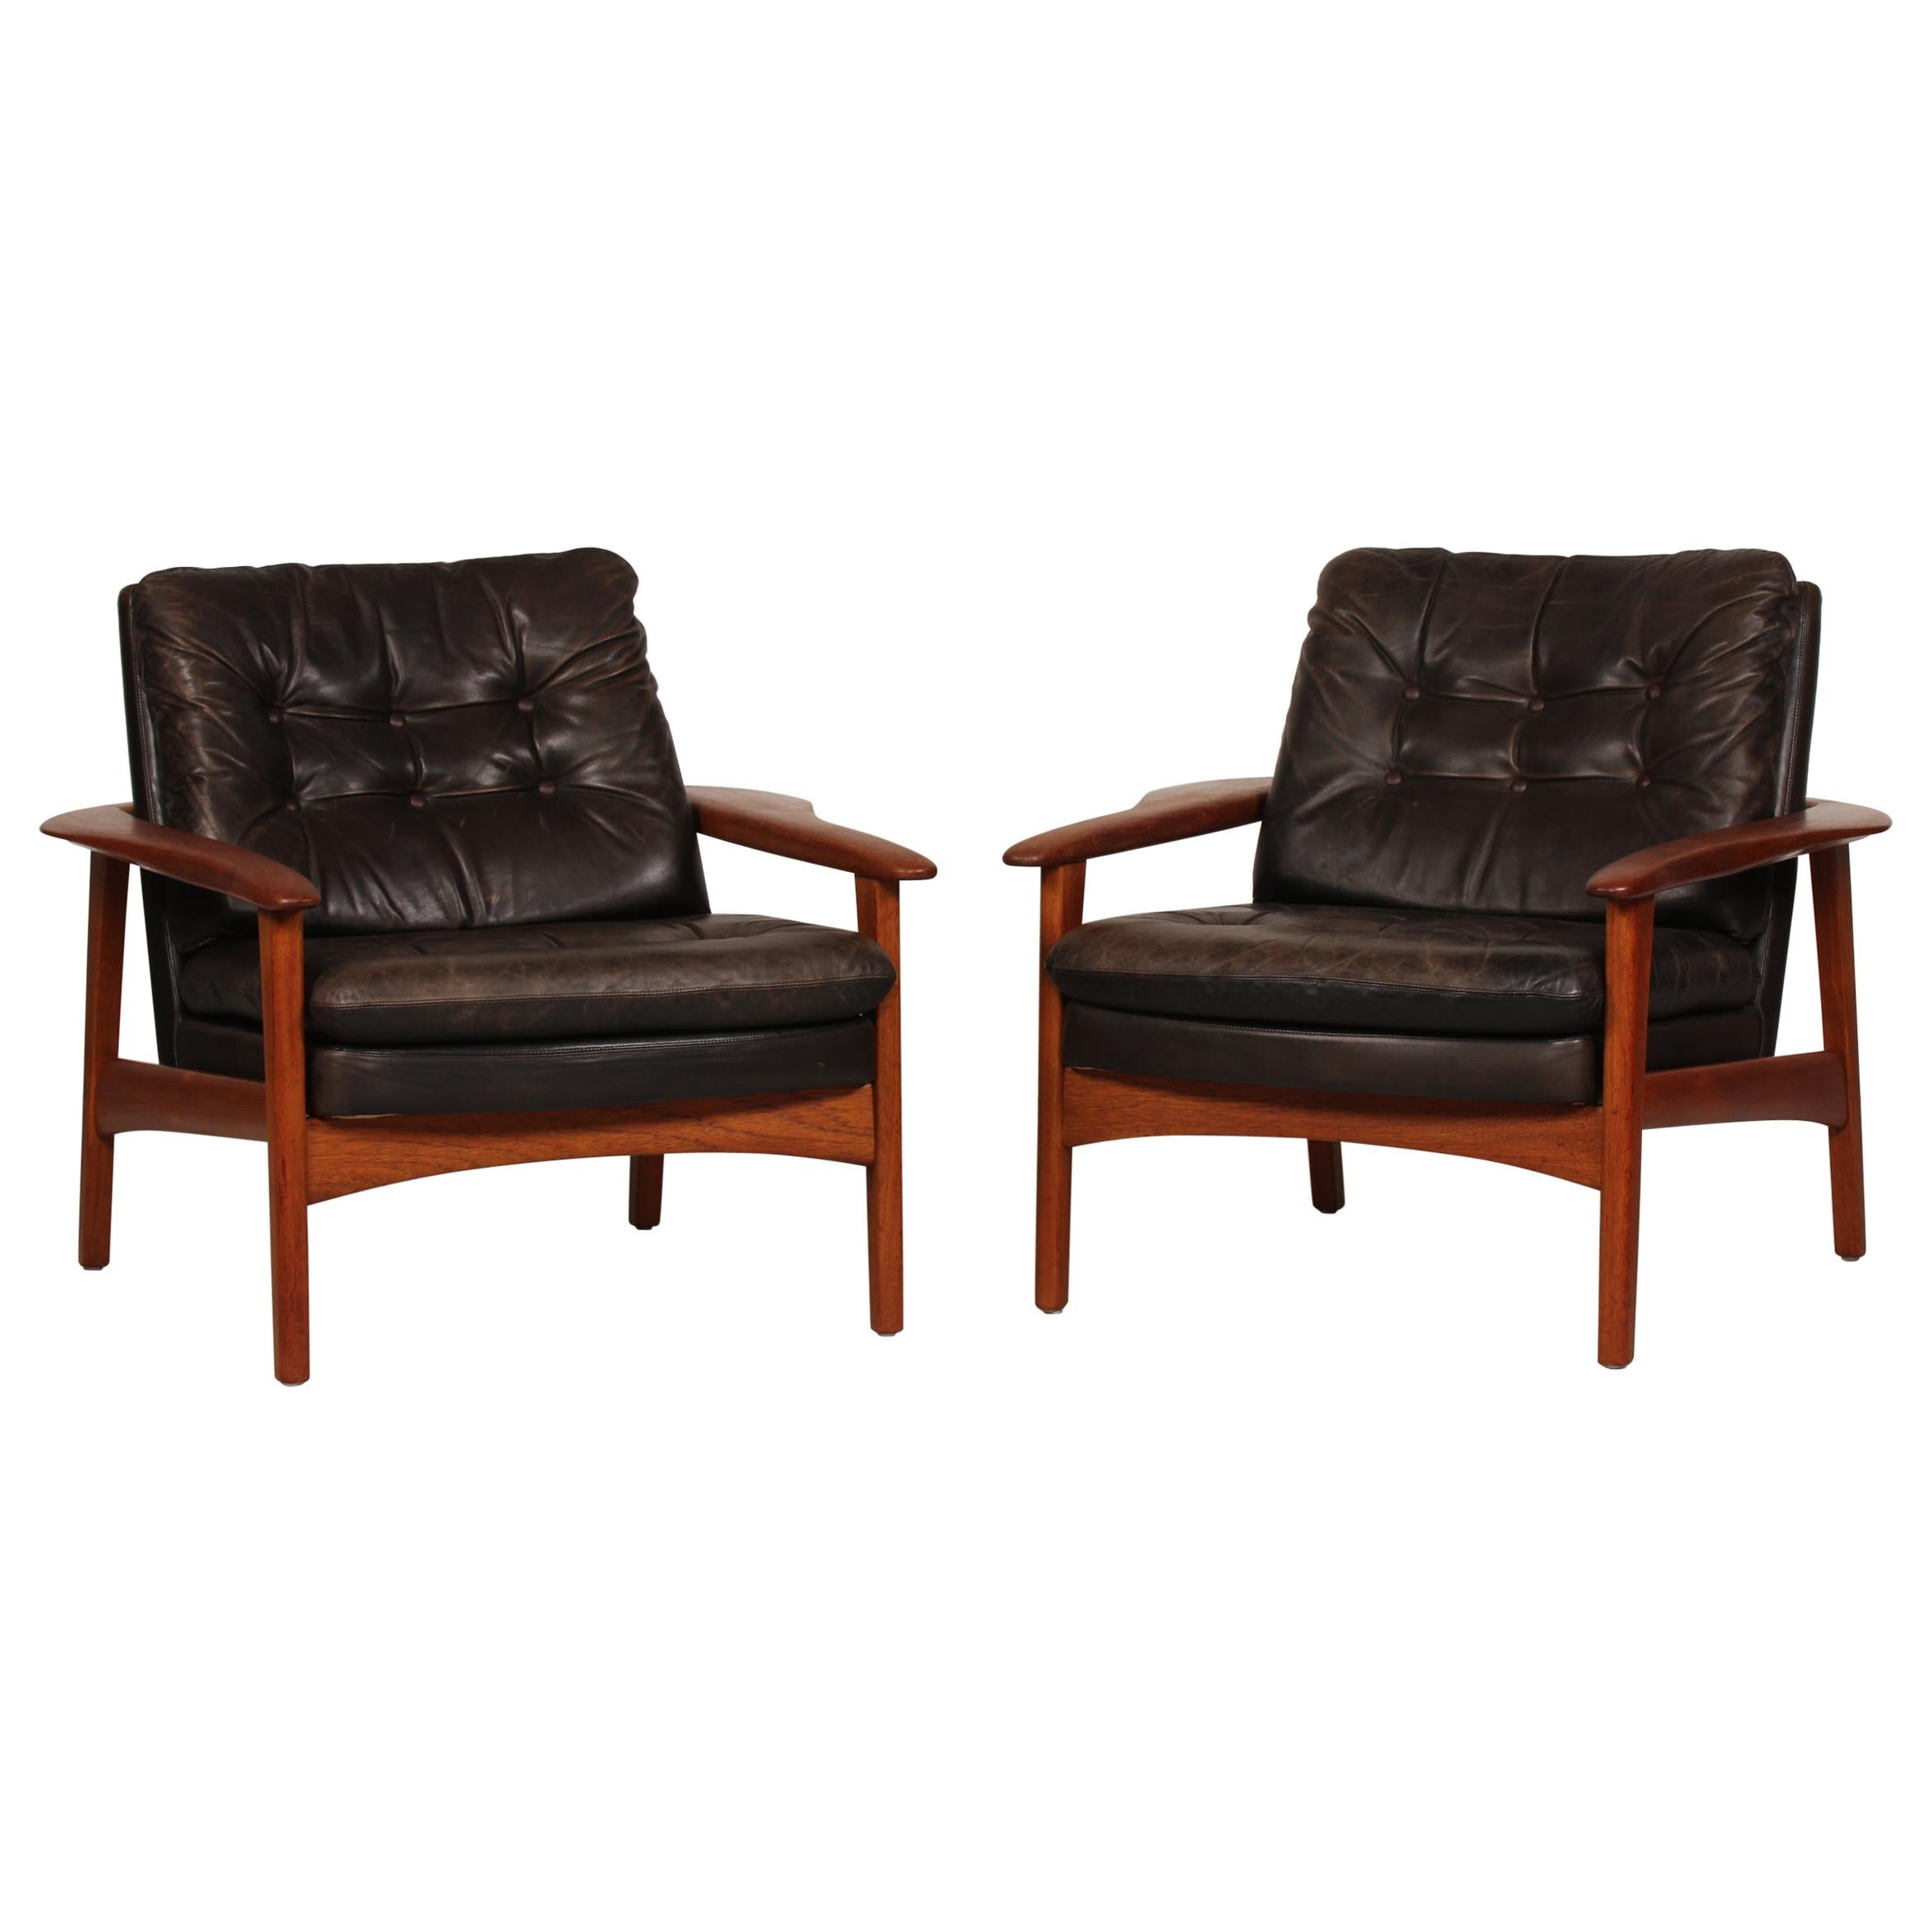 Ib Kofod-Larsen Attributed Danish Modern Teak Lounge Chairs with Black Leather